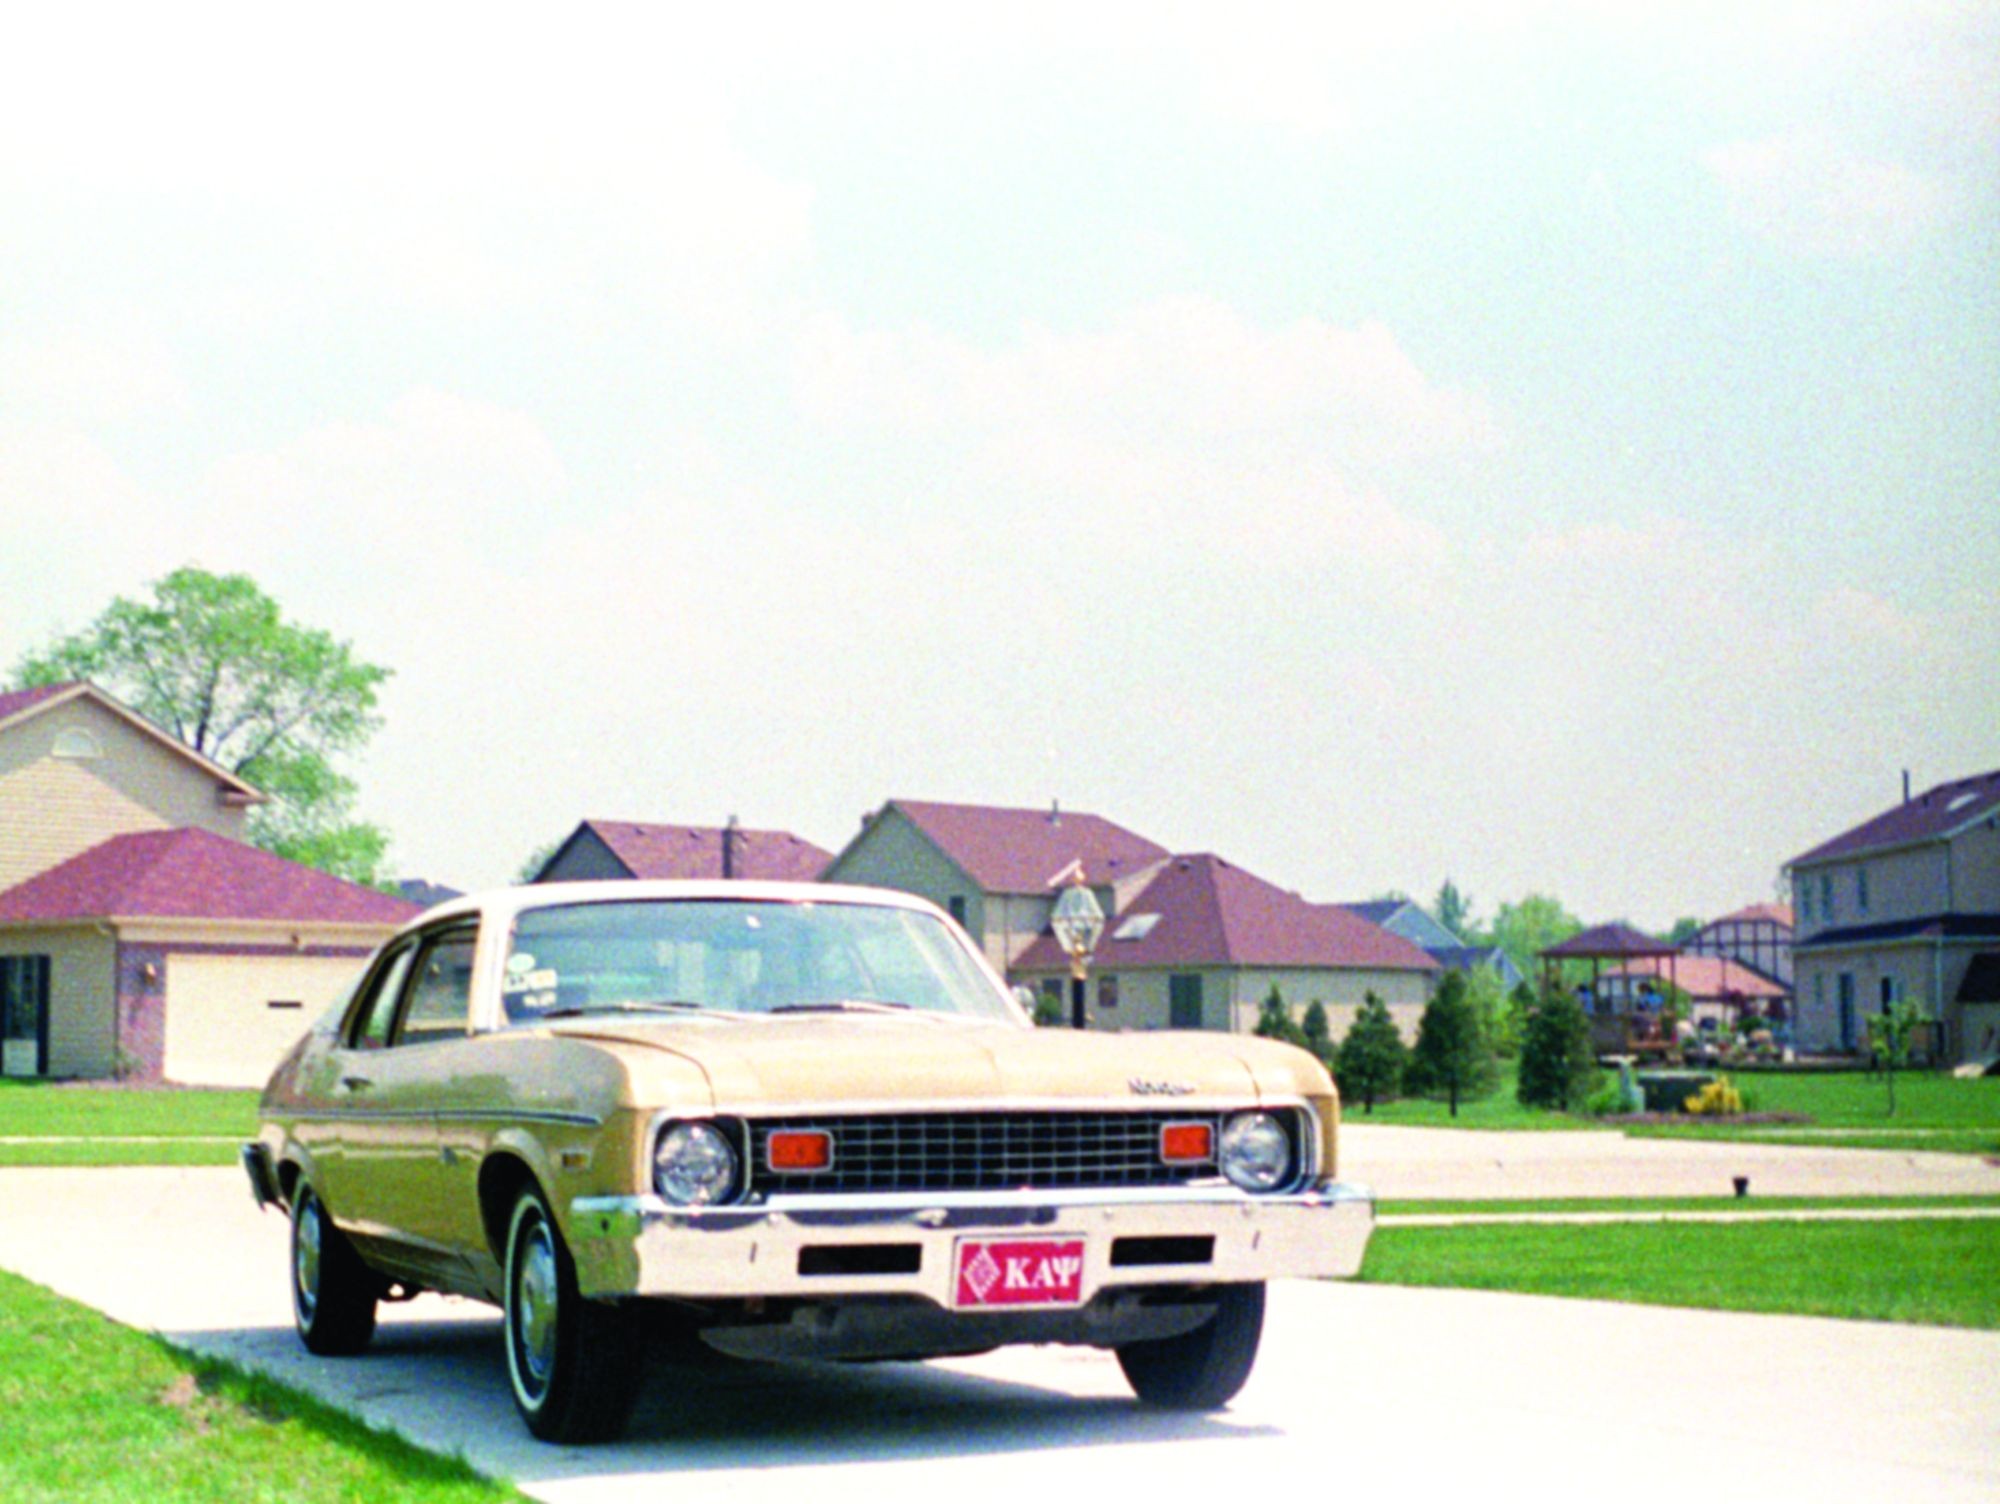 The Trusty, Rusty $520 1973 Chevrolet Nova